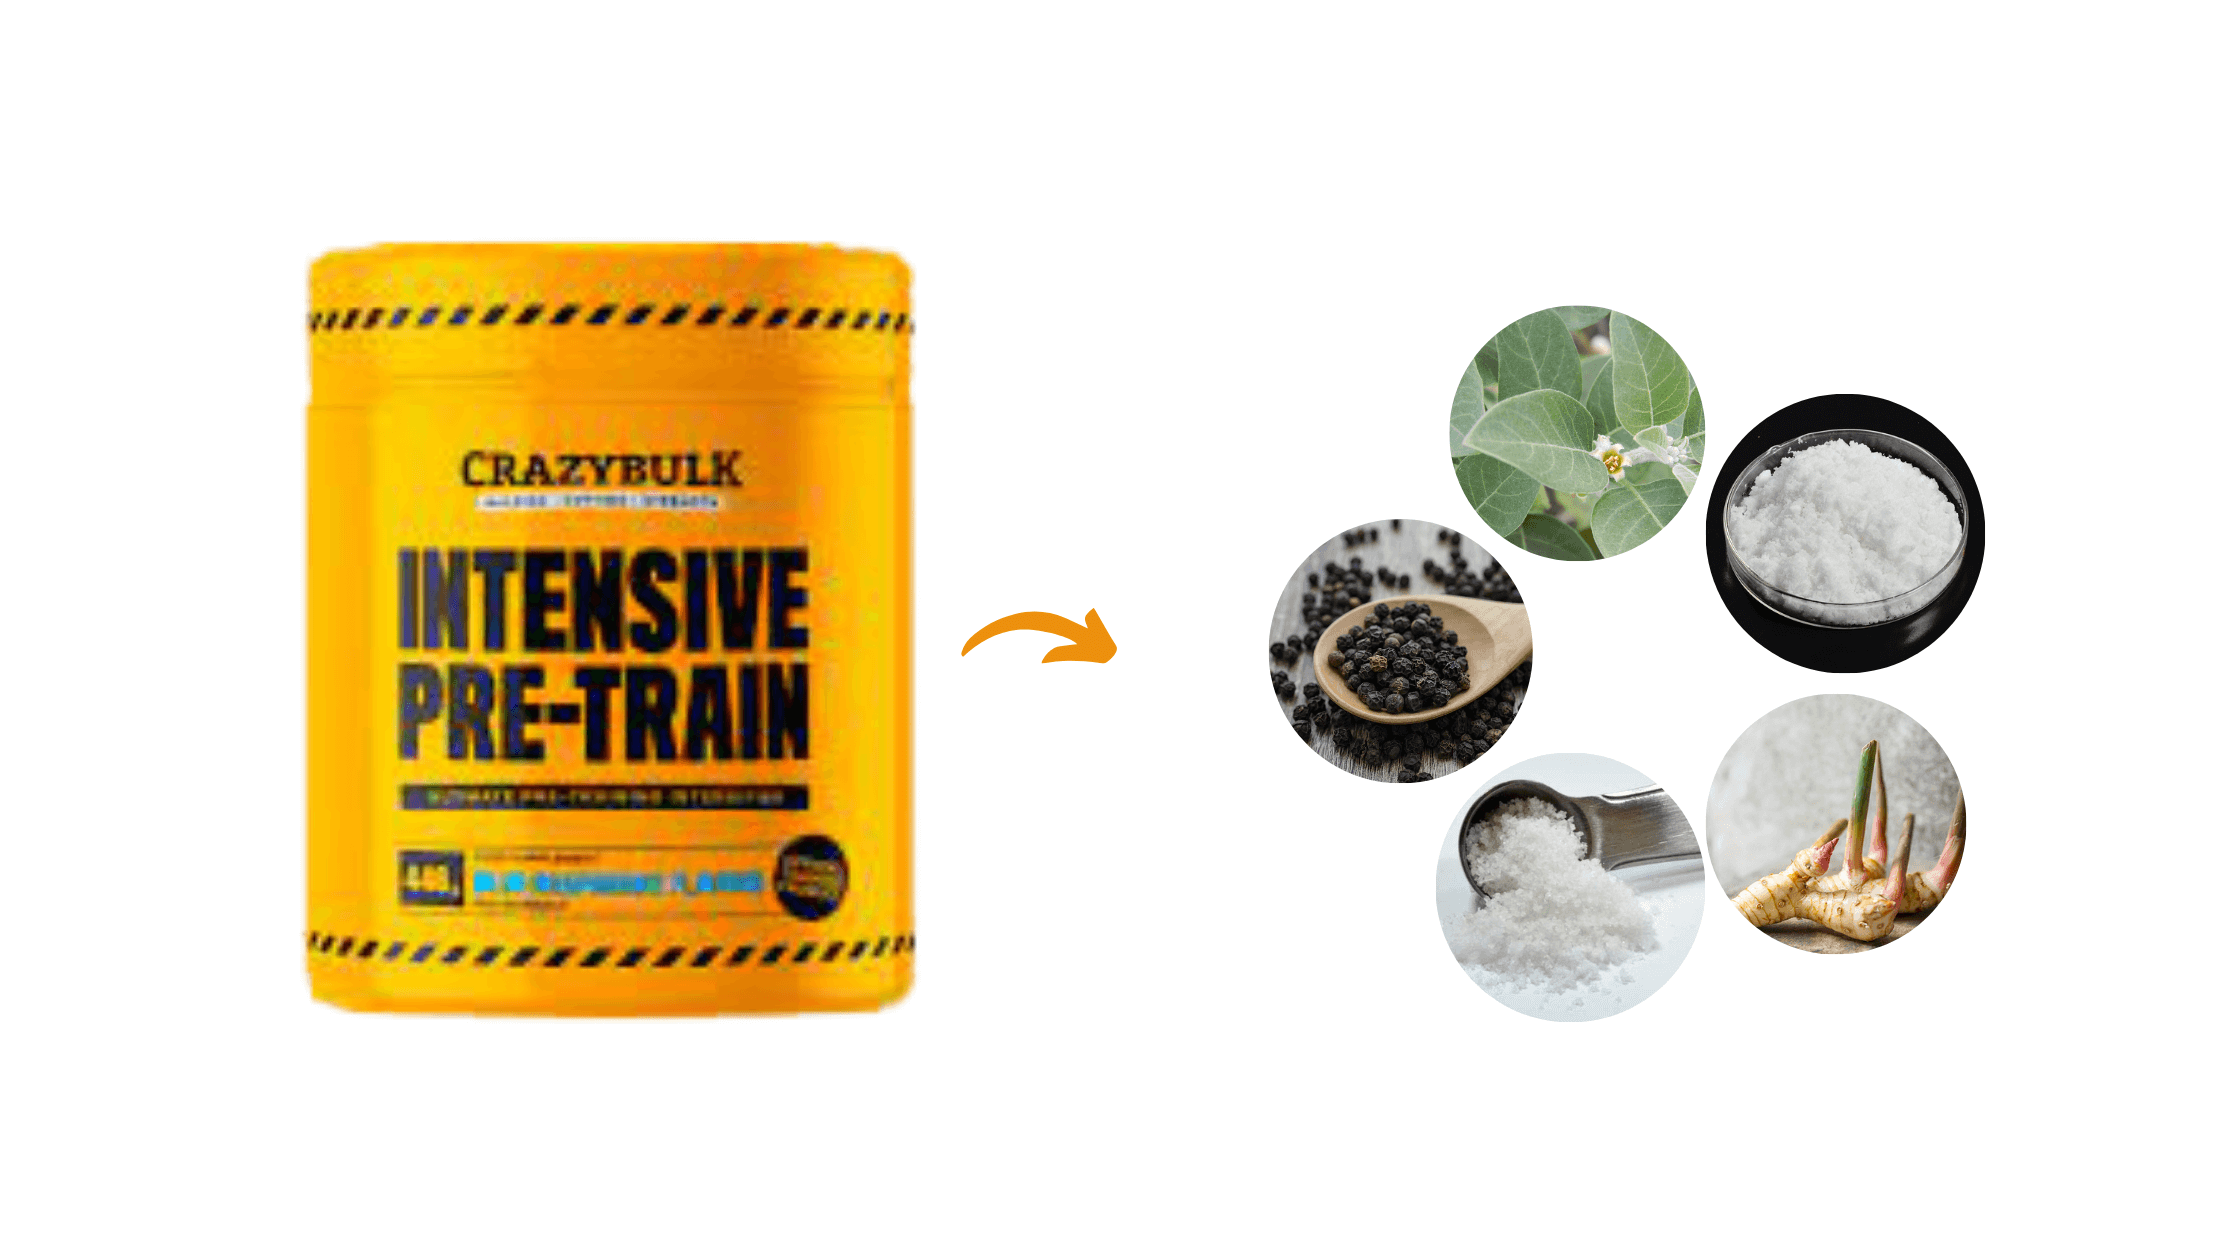 Intensive Pre-Train ingredients